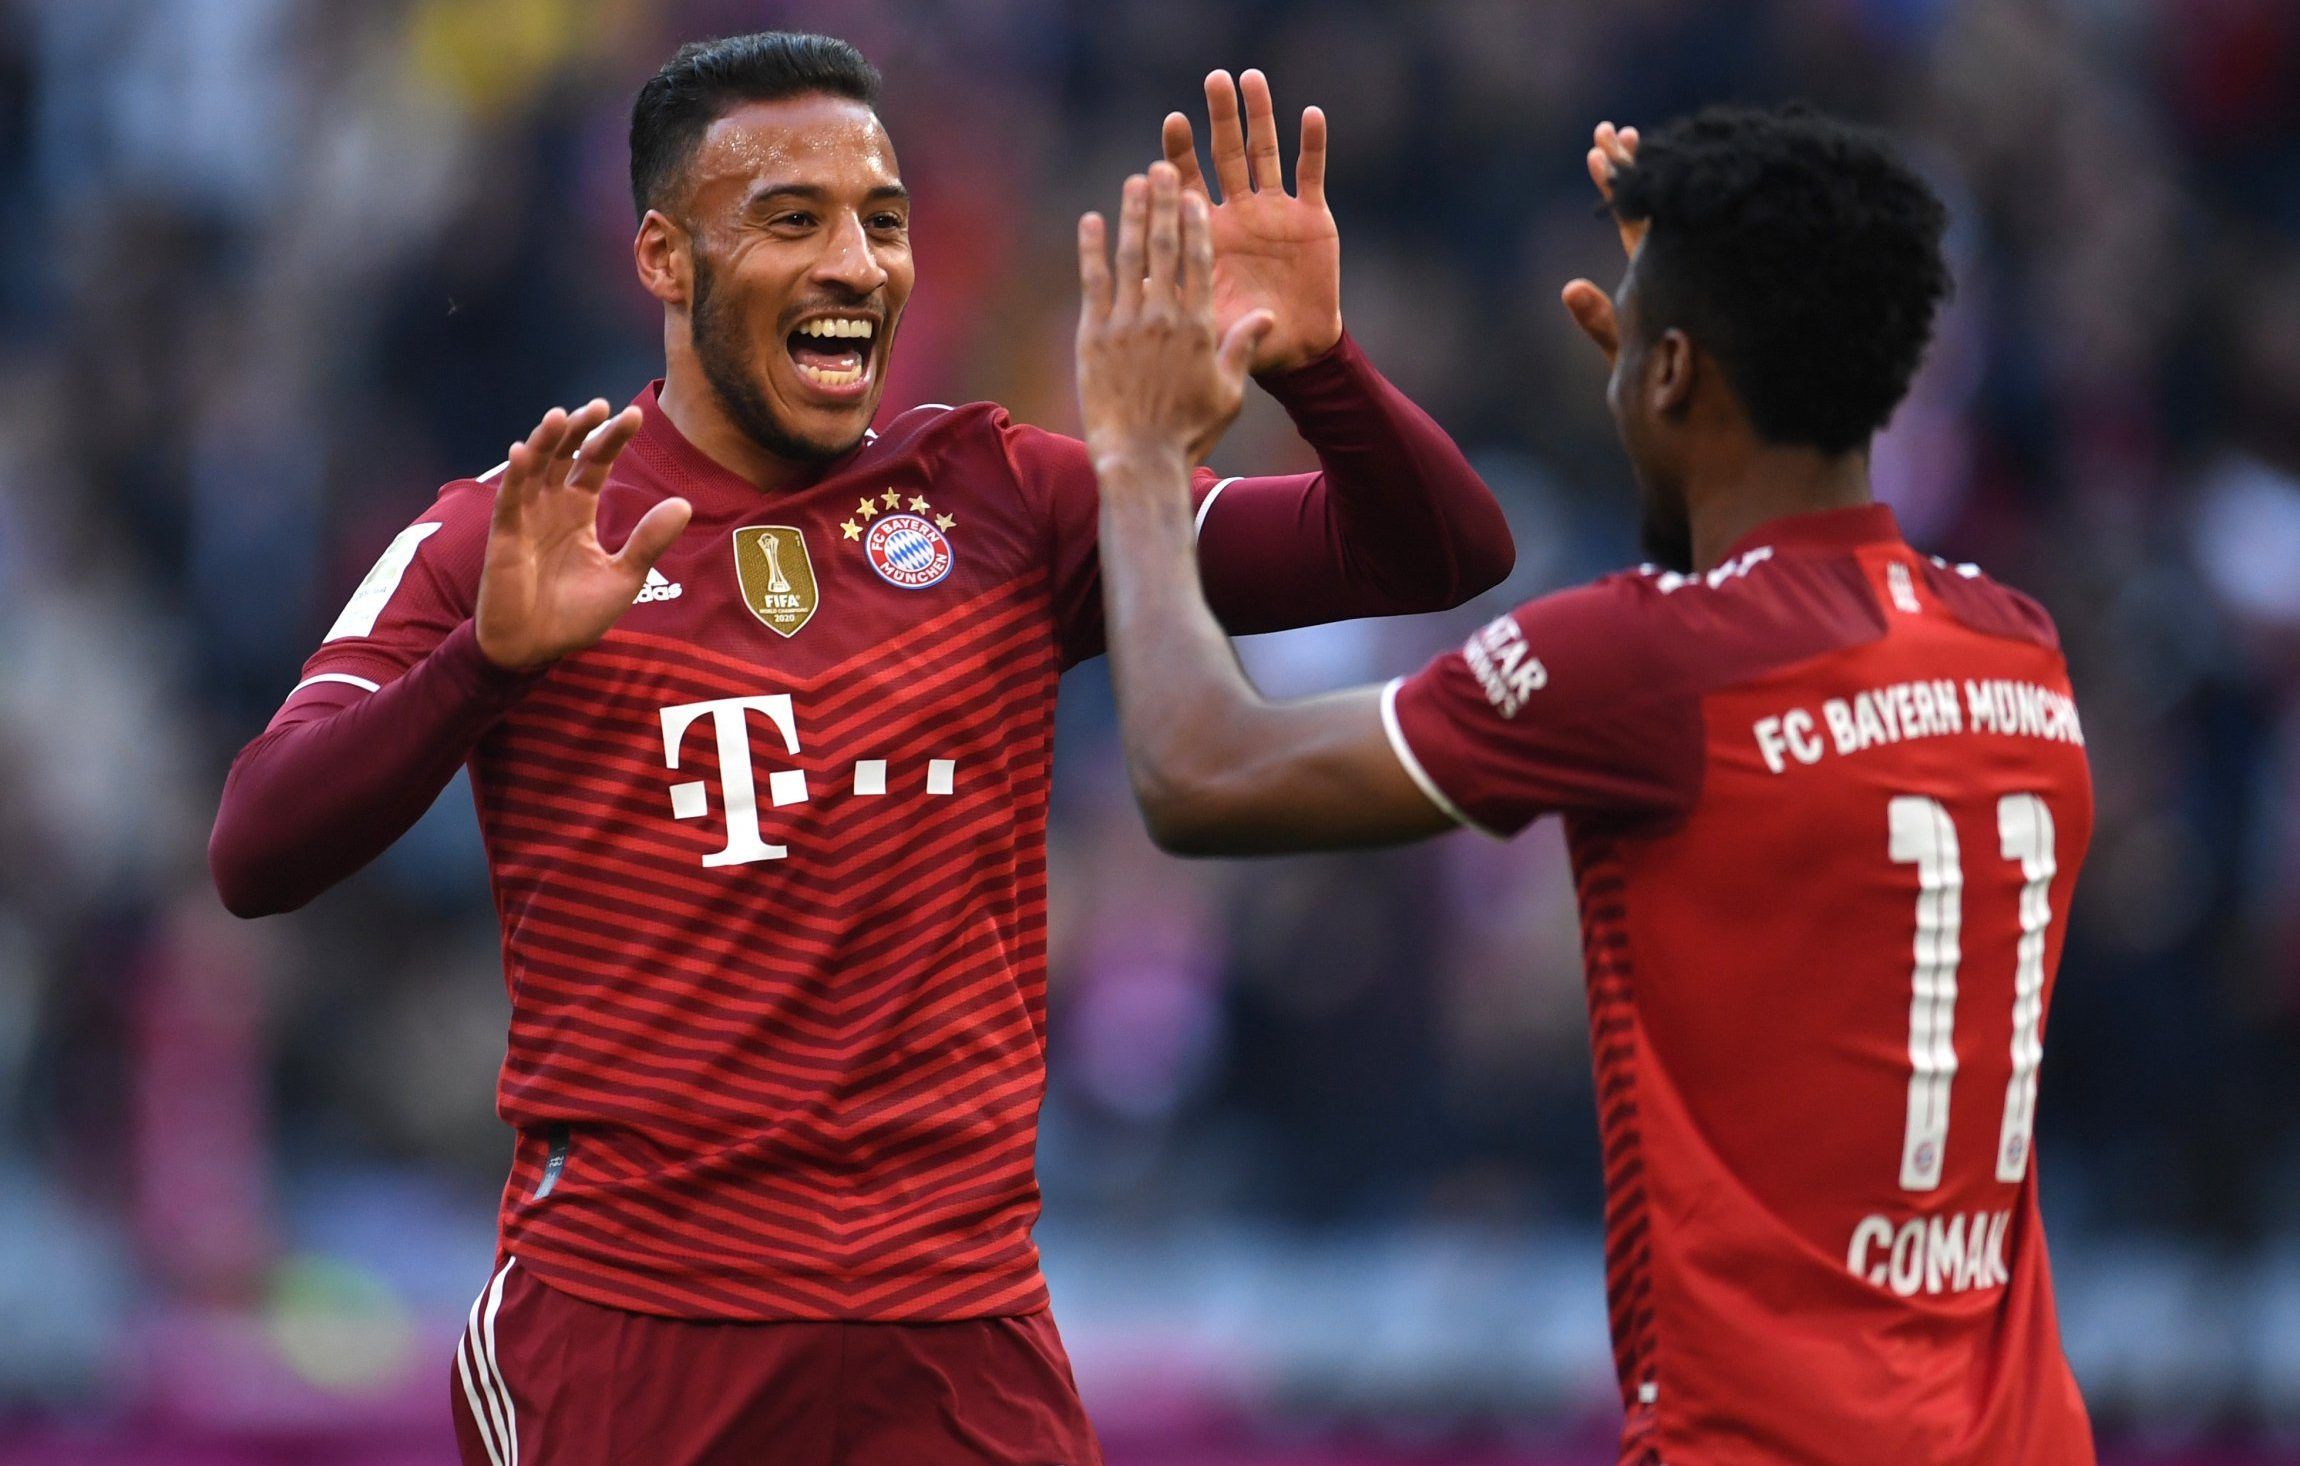 Bayern Munich's Corentin Tolisso and Kingsley Coman celebrate goal against Hoffenheim in the Bundesliga